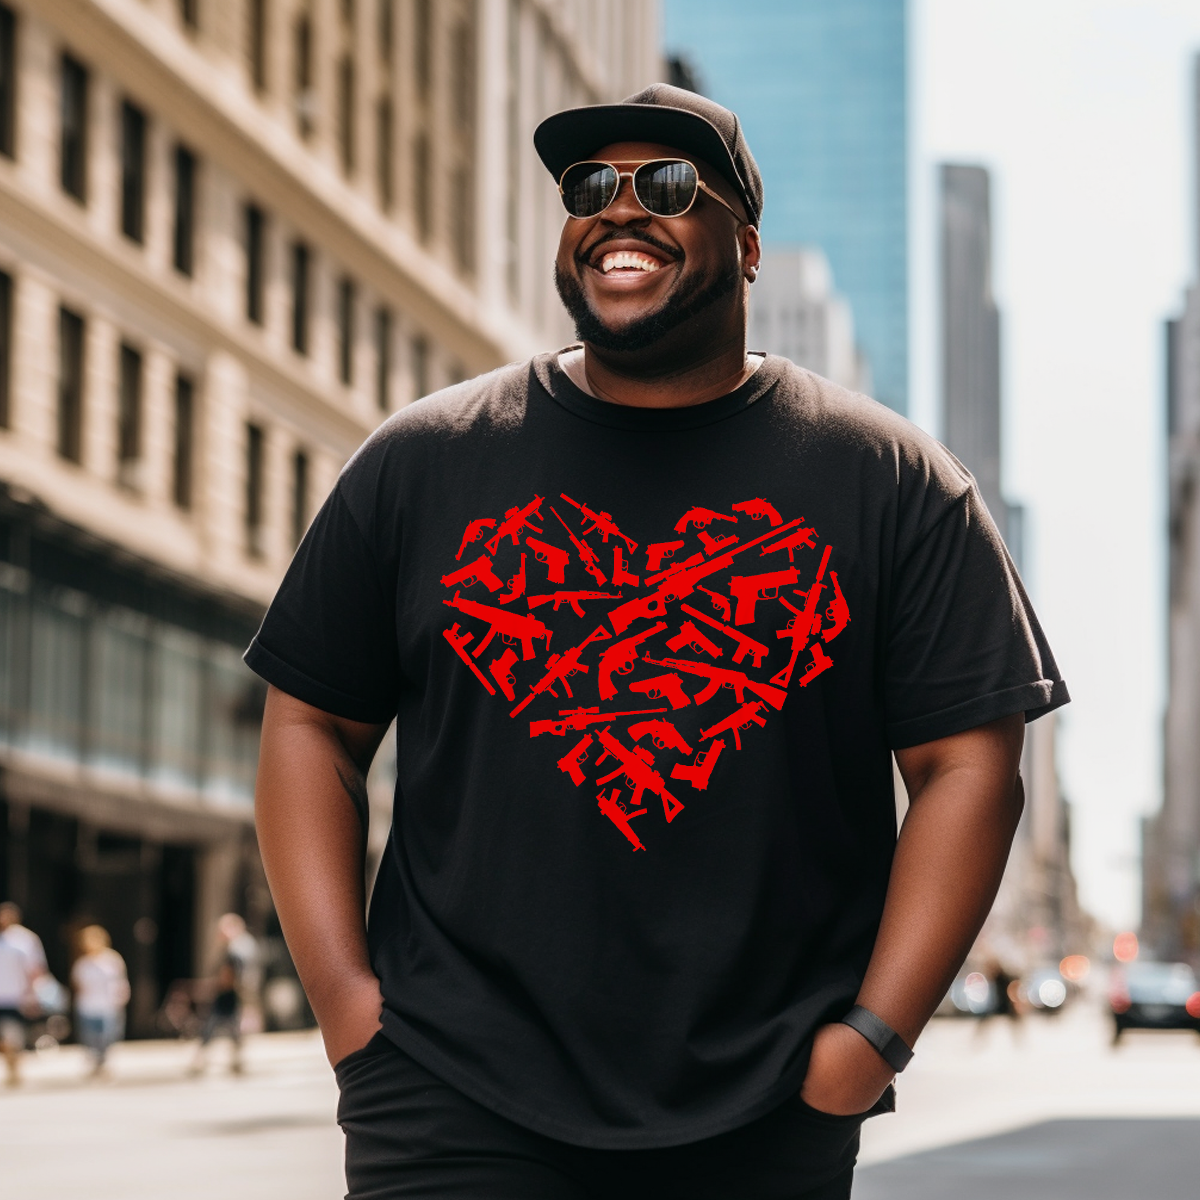 Heart Valentines Days Gift Gun Lovers Gift T-Shirt, Men Plus Size Oversize T-shirt for Big & Tall Man